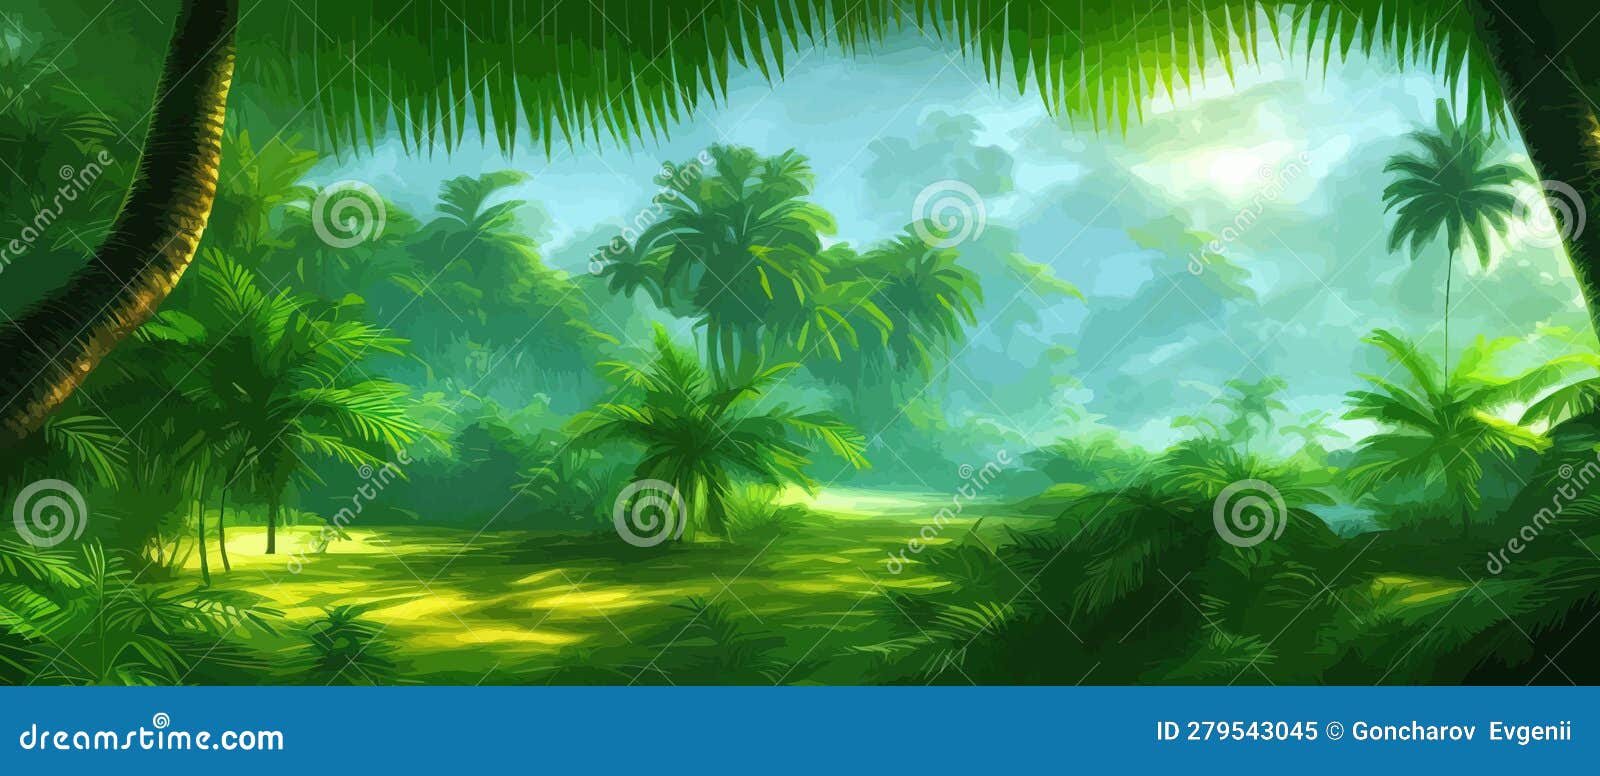 Jungle Theme backdrop Scenery Green Forest Tree Backdrop